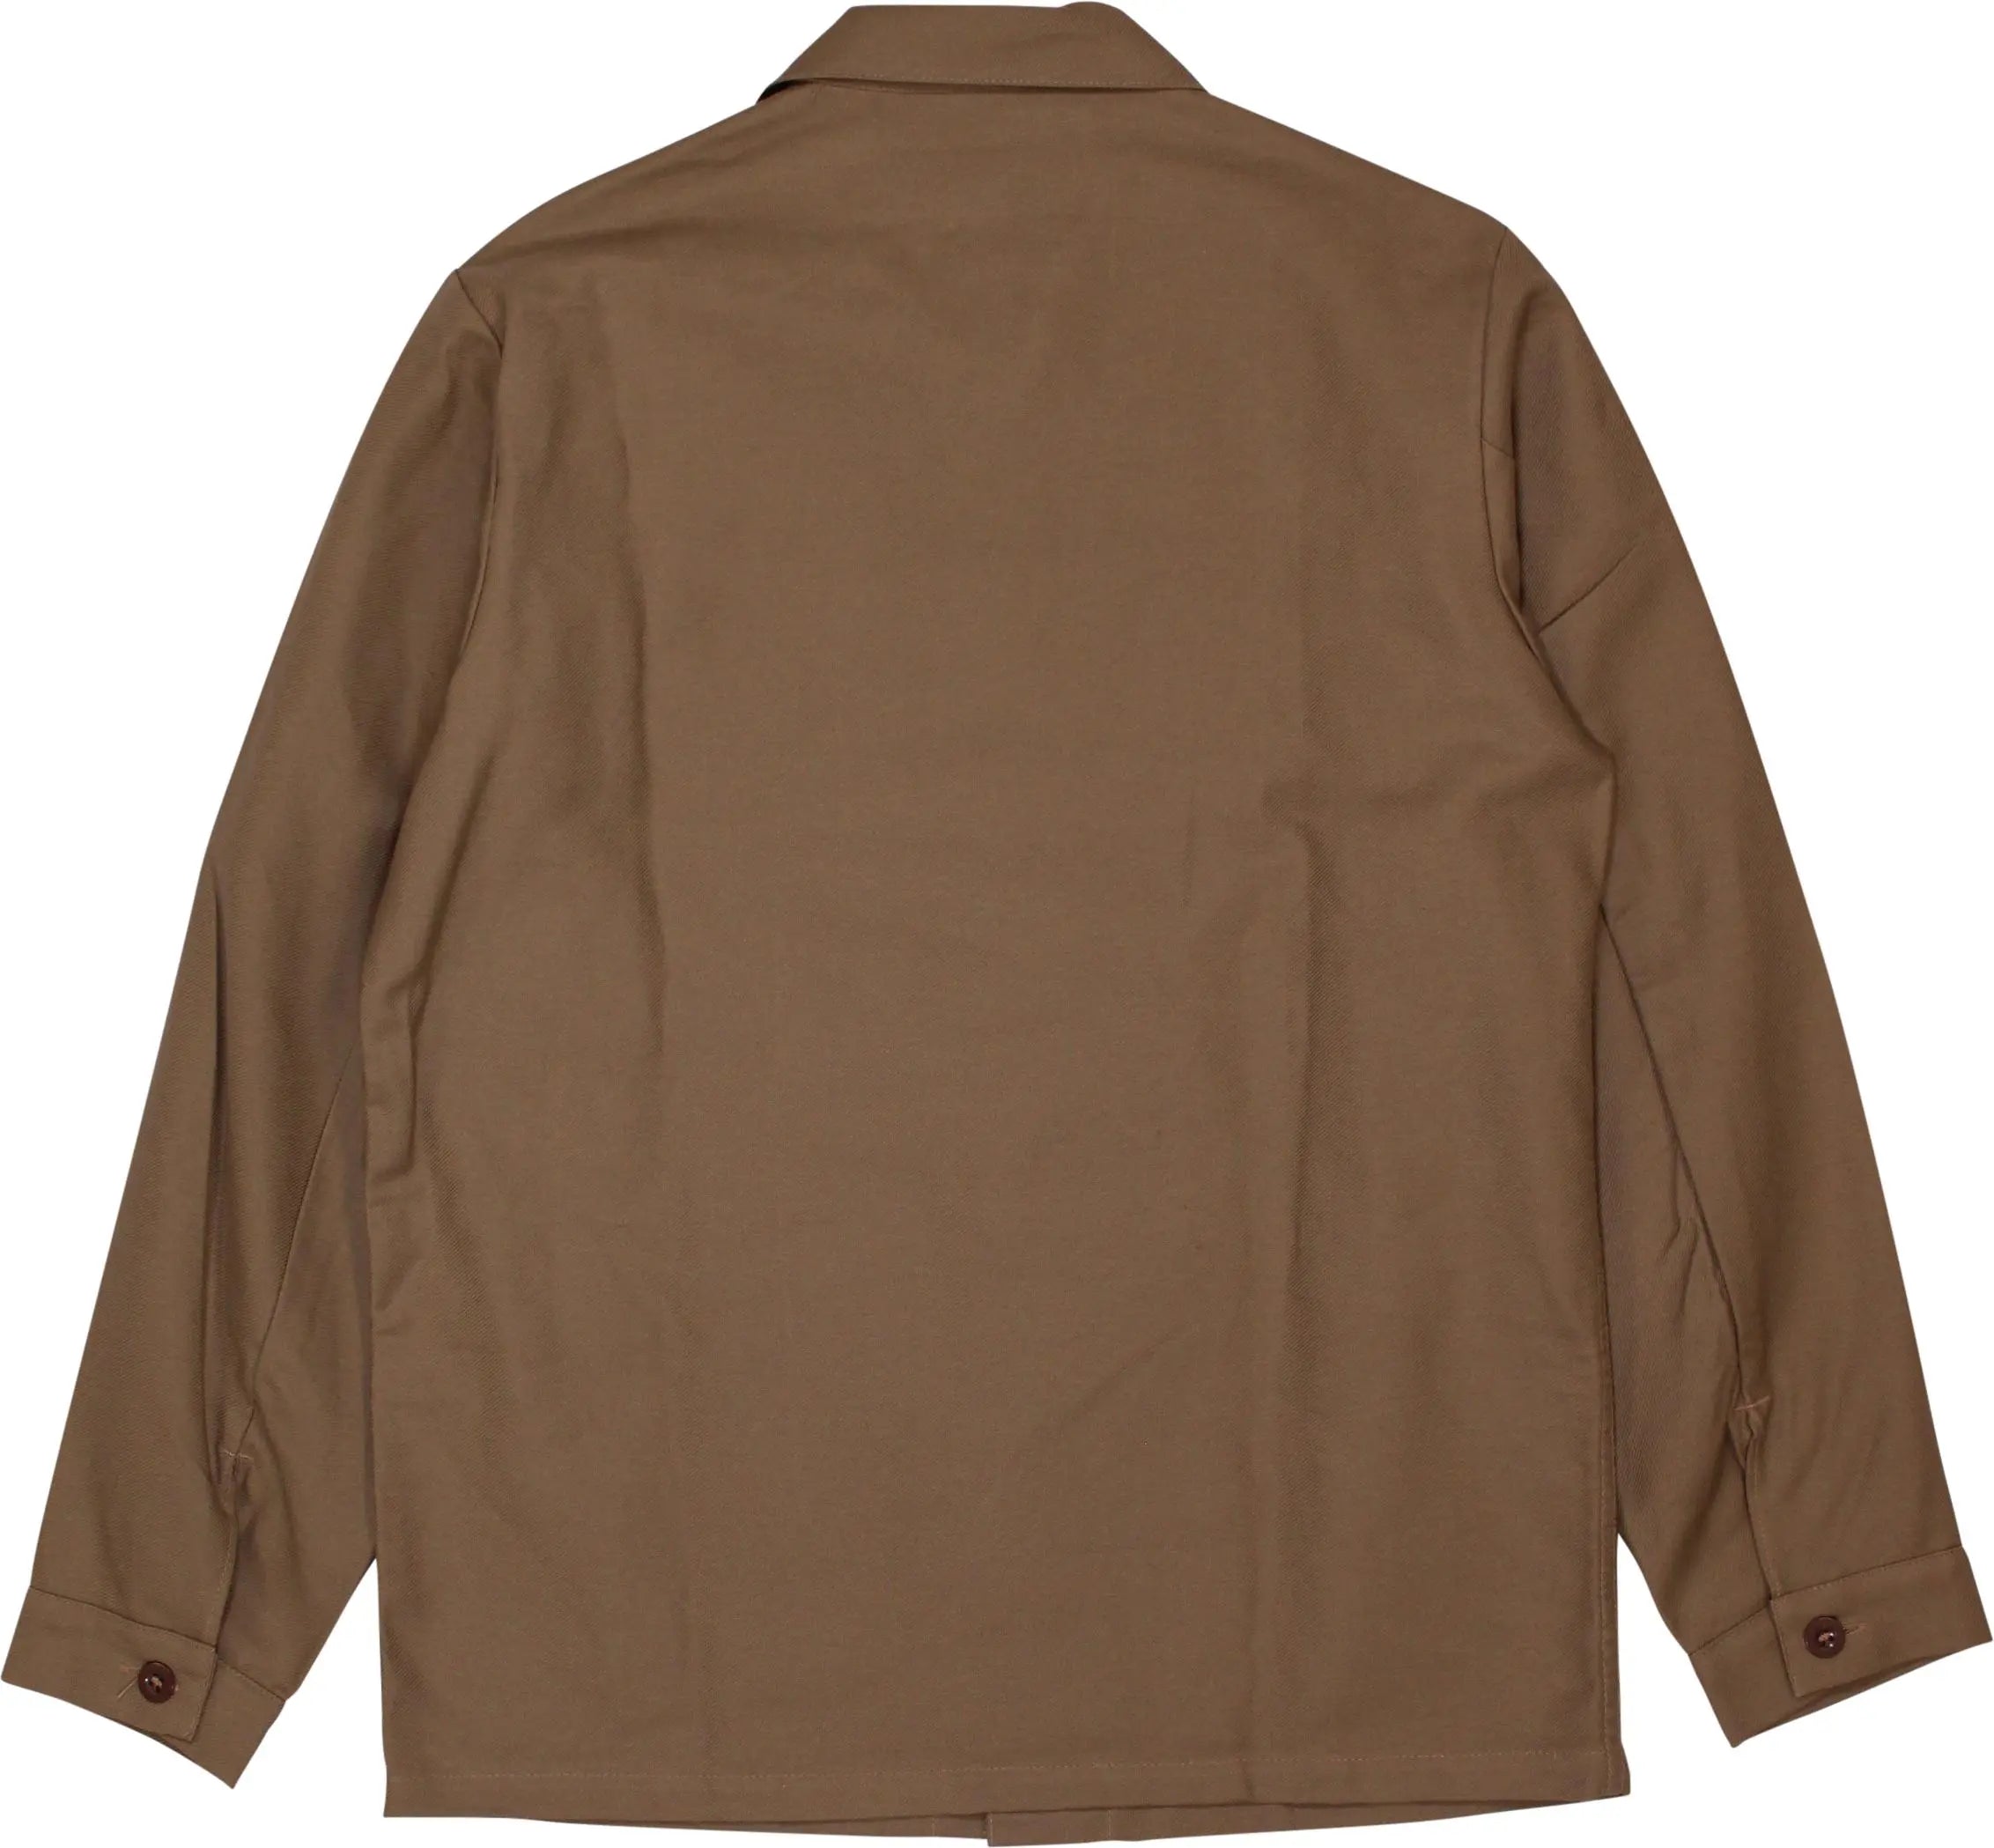 Spilag - 70s Workwear Jacket- ThriftTale.com - Vintage and second handclothing